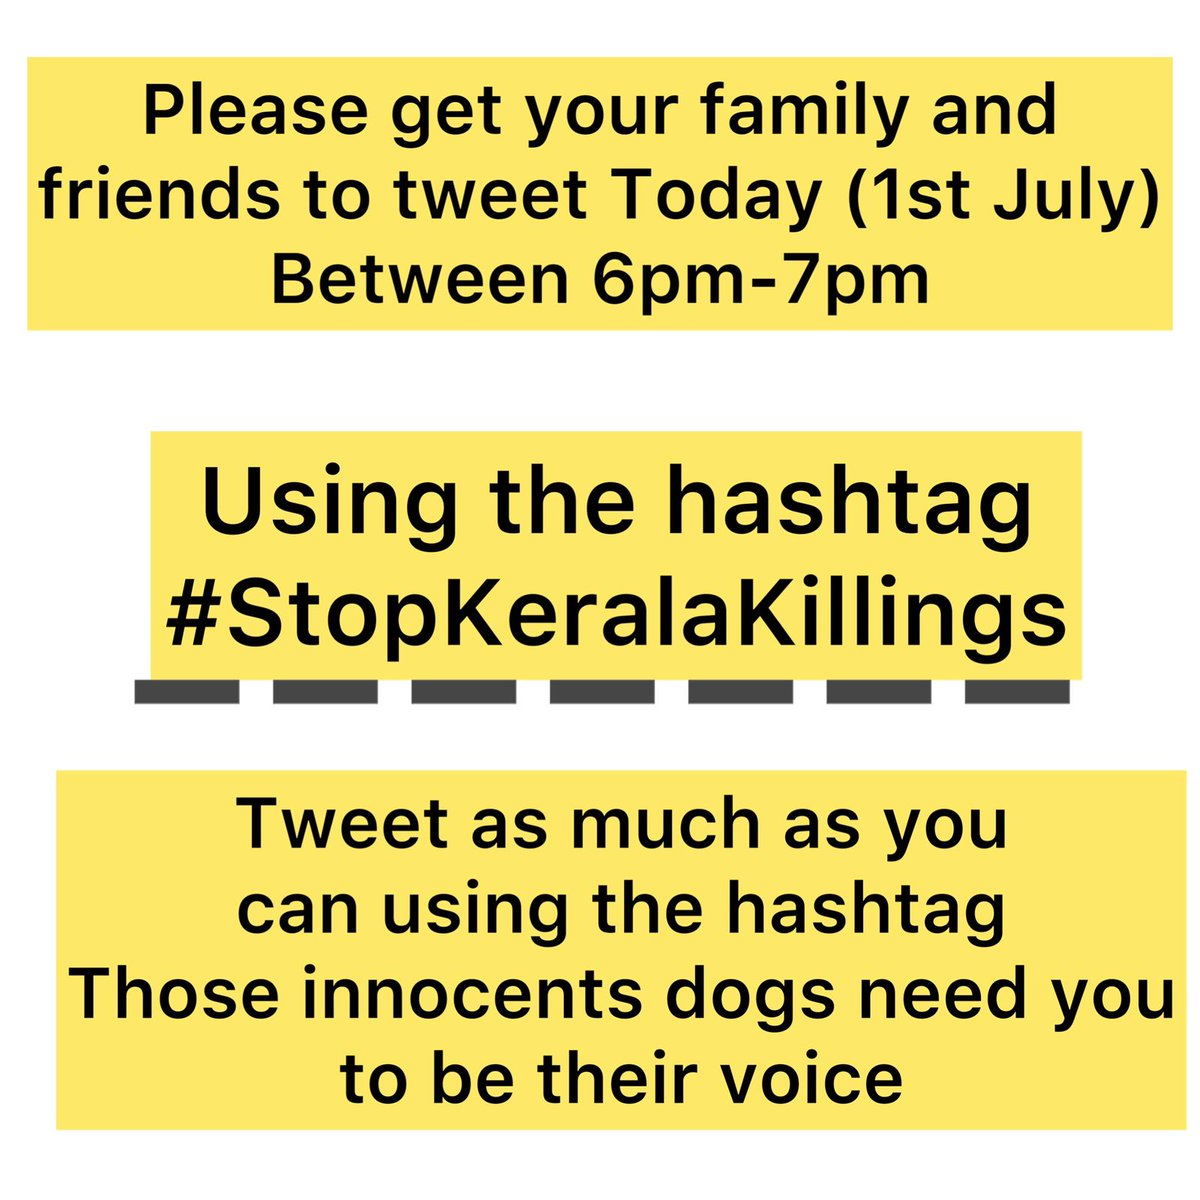 #StopKeralaKillings #Stopkeralatourism #BoycotKerala #alllivesmatter #Karmawillcomeforyou #StopAnimalCruelty